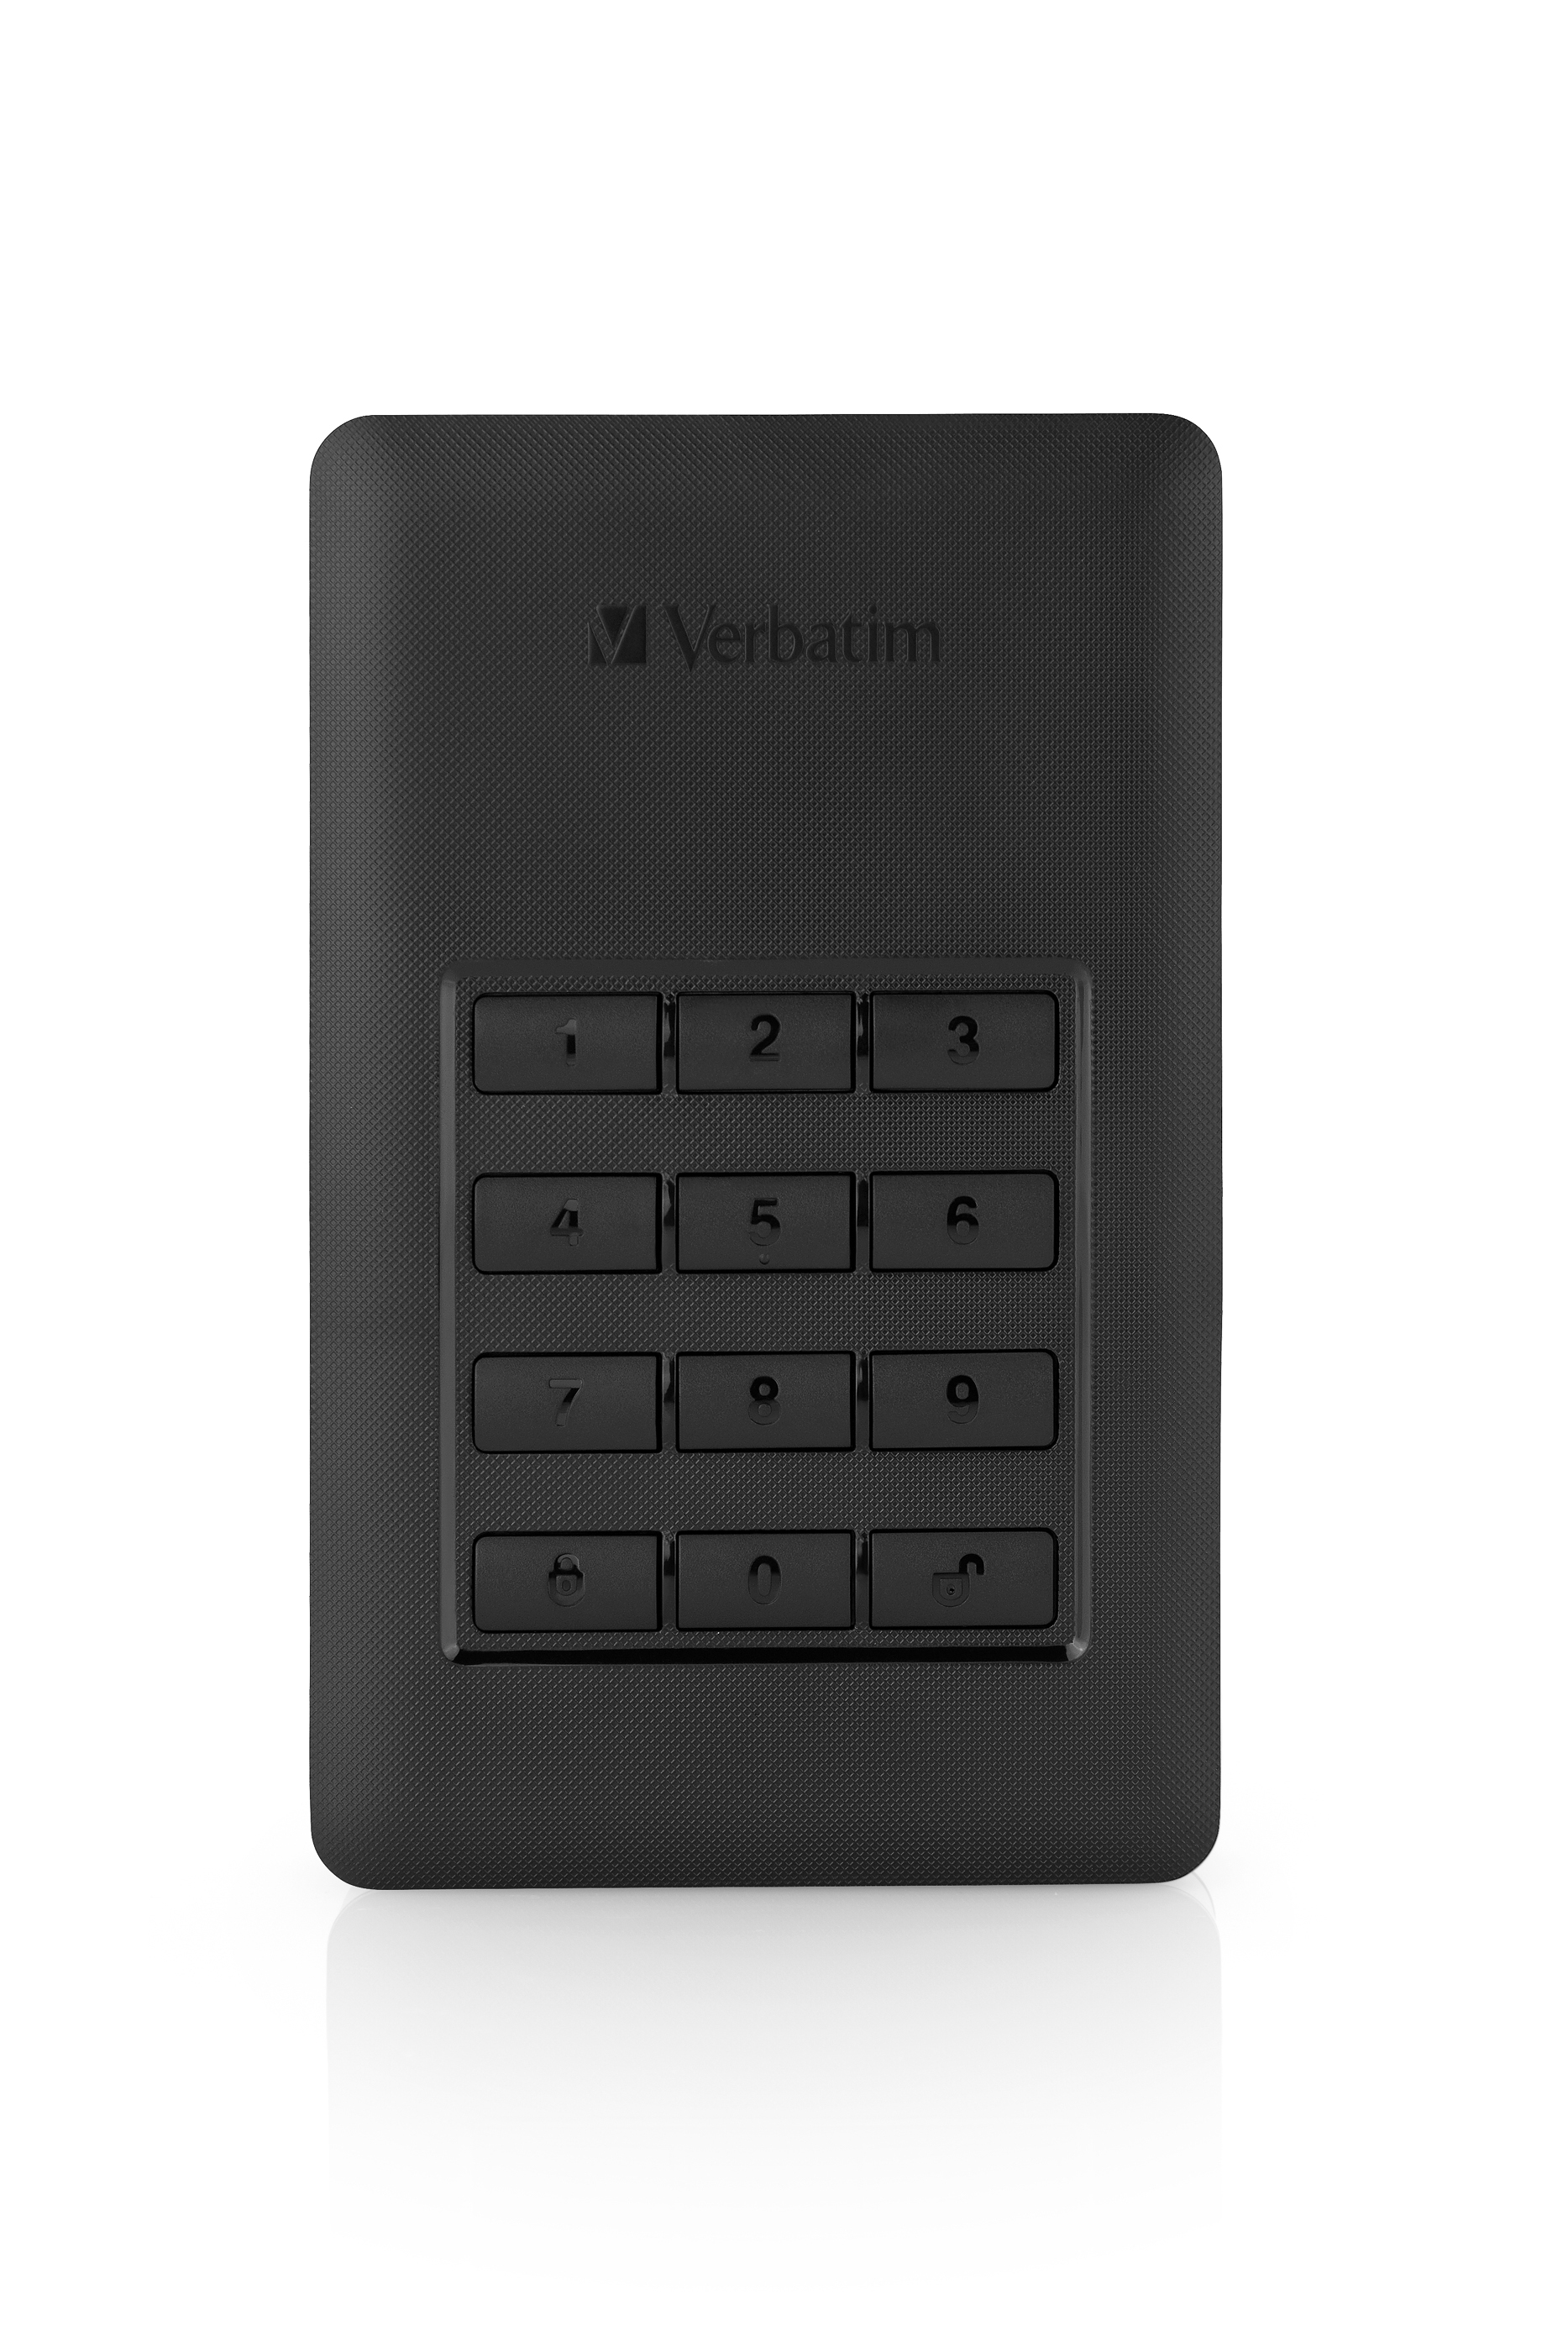 Verbatim Store ?n? Go Secure Portable Festplatte 1 TB mit Code-Zugang - 1000 GB - Schwarz - Silber